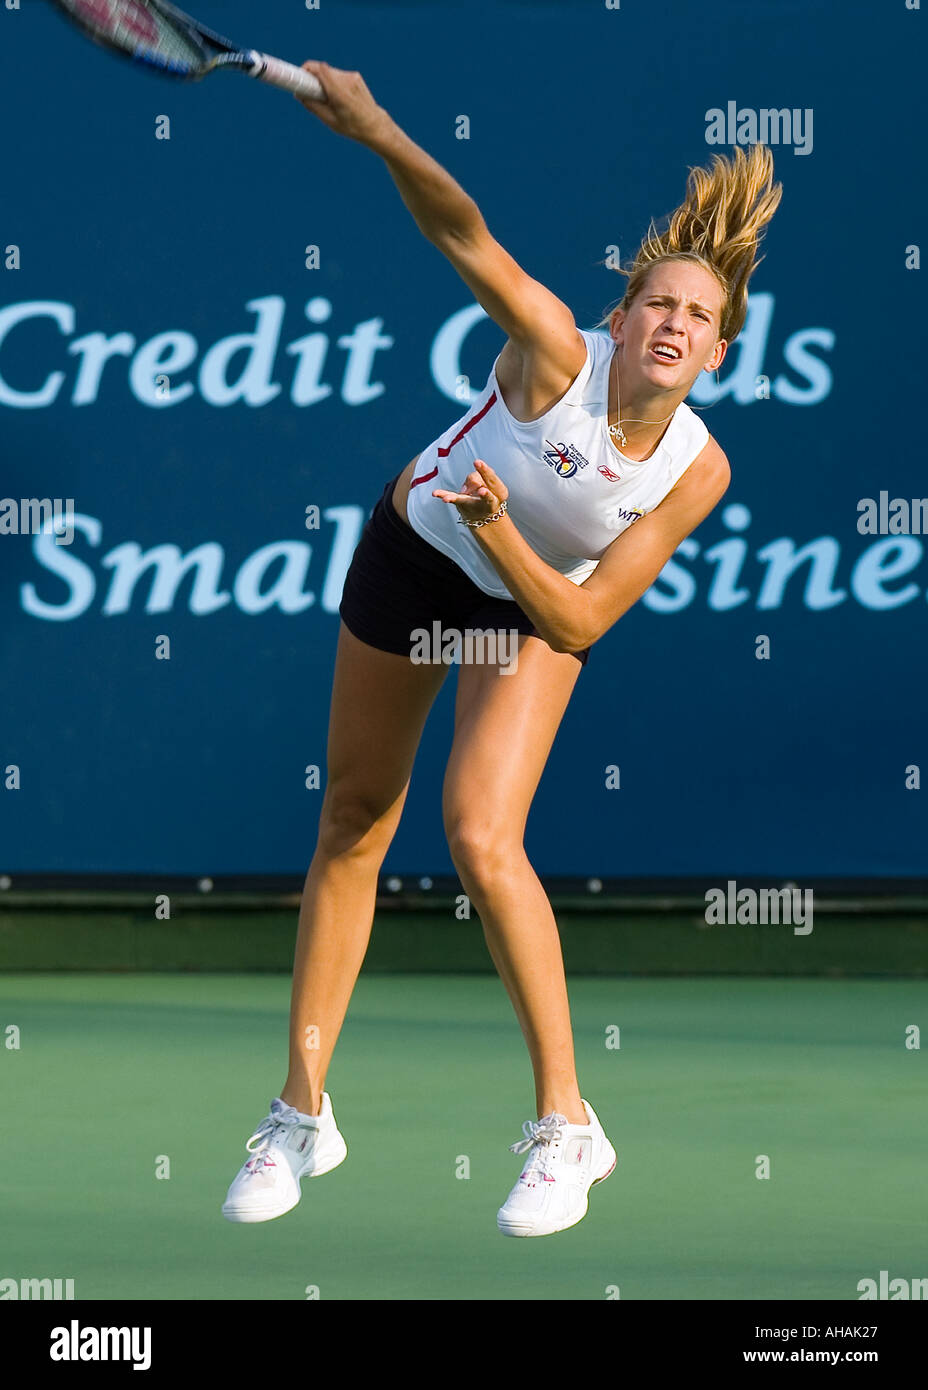 16-year old WTA professional women's tennis star, Nicole Vaidisova serves  in WTT tennis at the Palisades Club in Newport Beach, Stock Photo